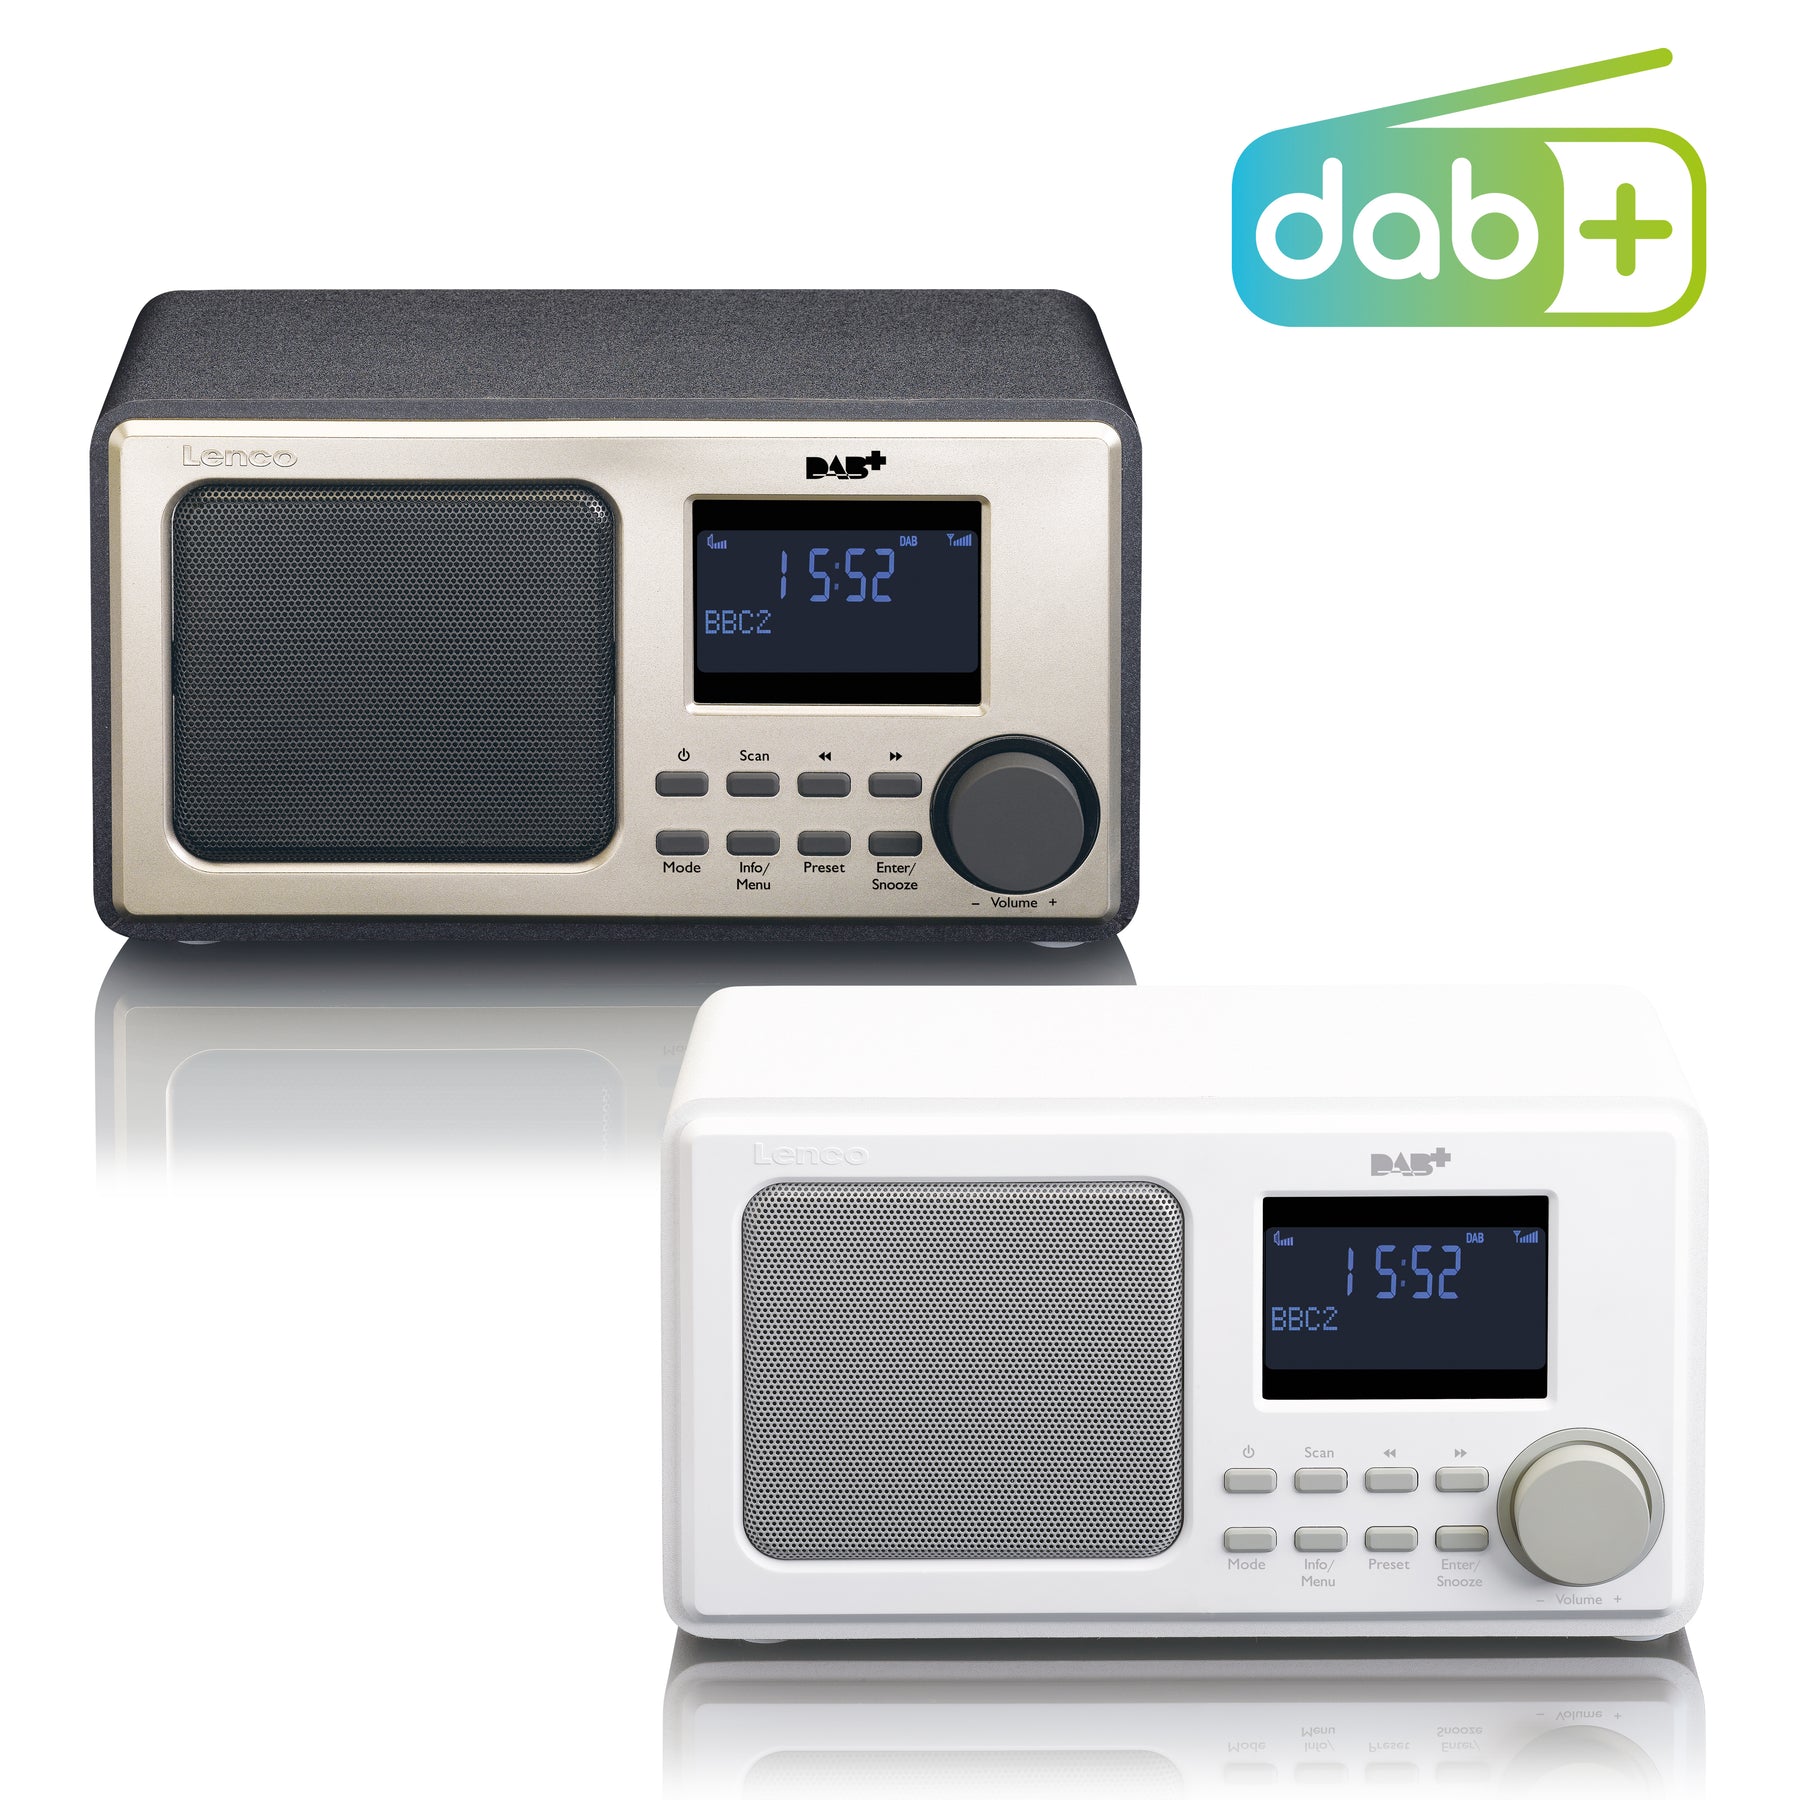 LENCO DAR-010BK - DAB+ FM Radio with AUX-input and Alarm Function - Bl –  Lenco-Catalog | Digitalradios (DAB+)